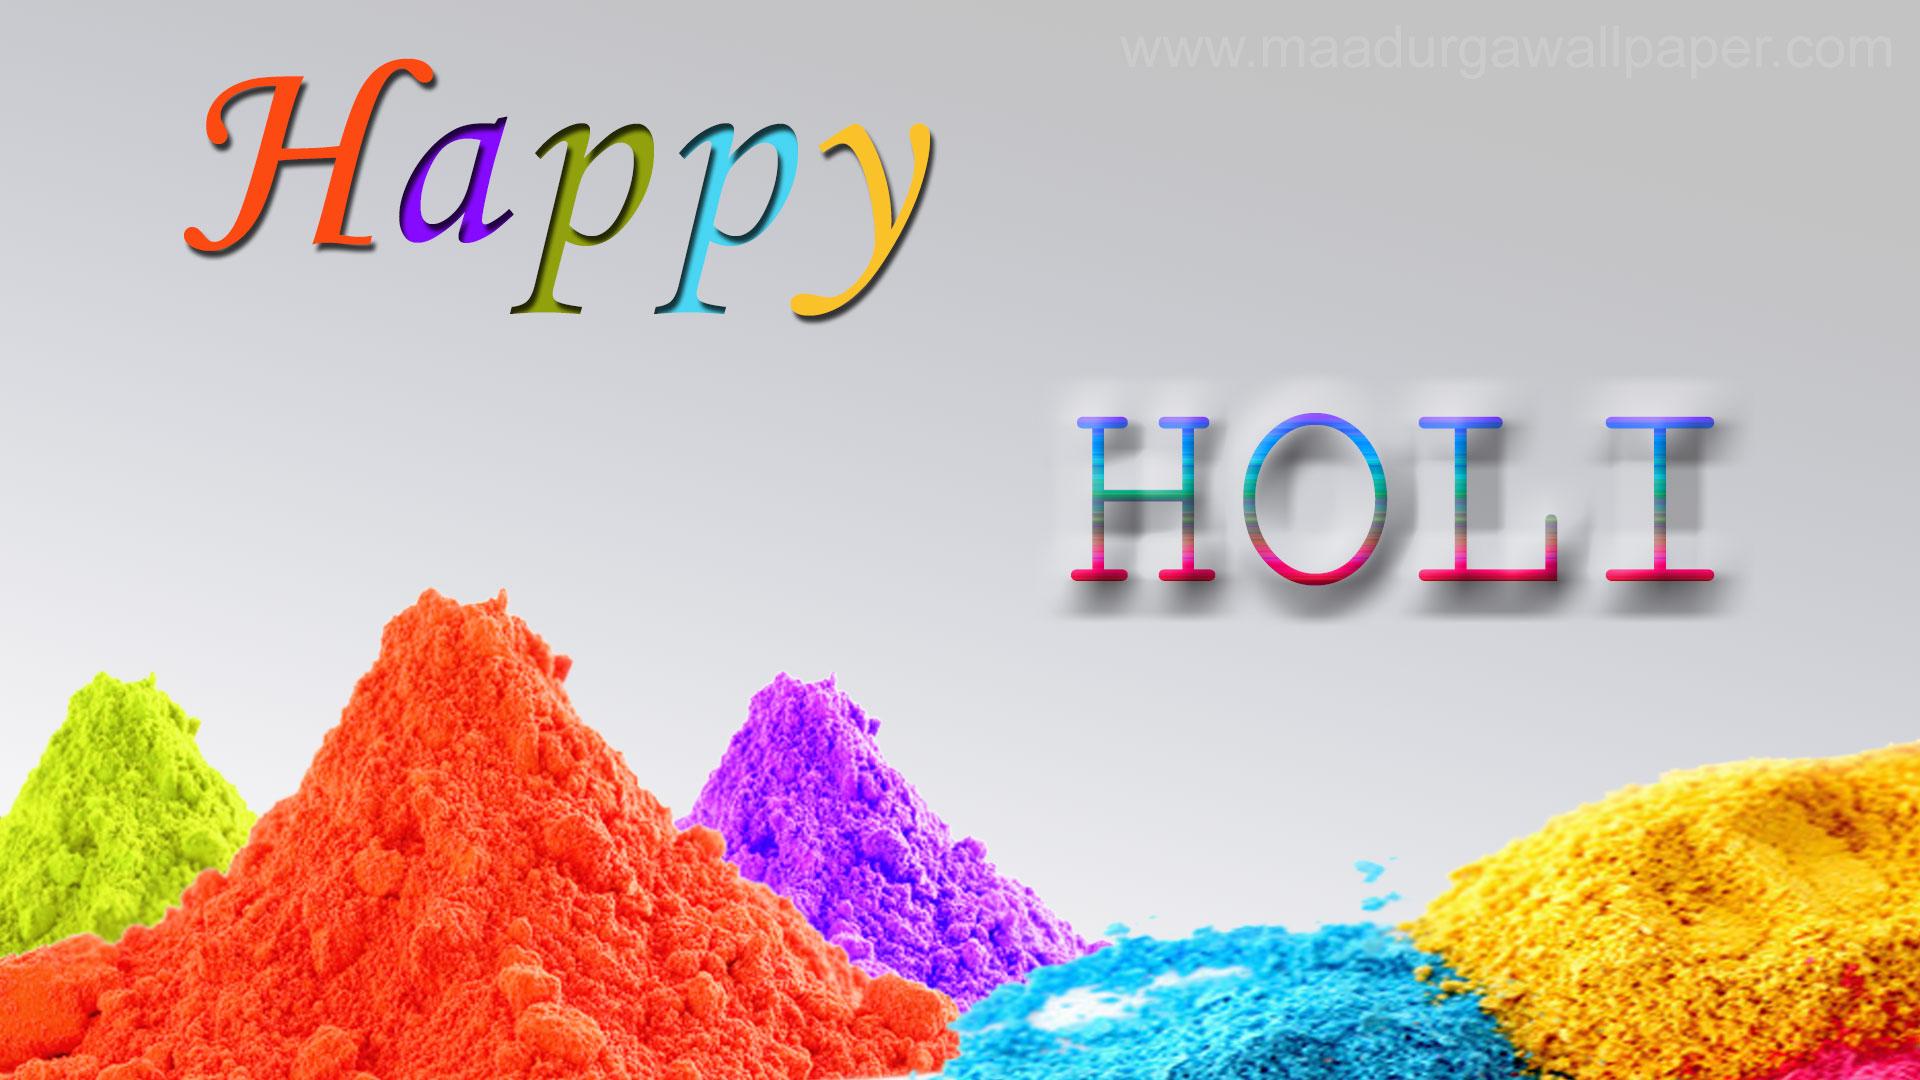 Happy Holi Wallpaper & Holi image Download